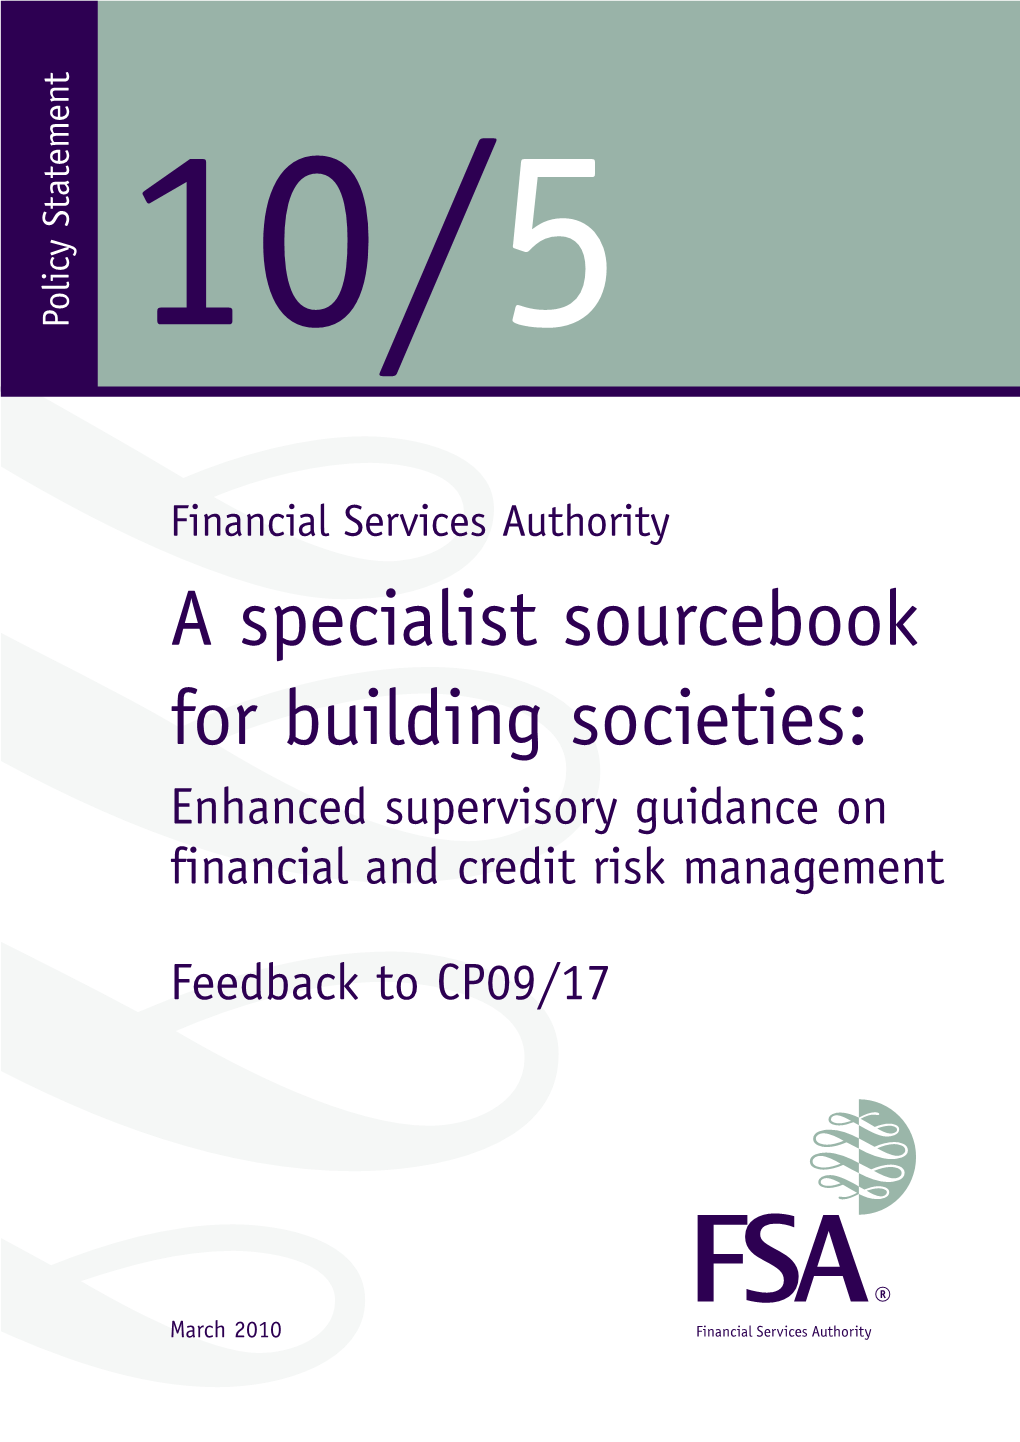 PS10/5: a Specialist Sourcebook for Building Societies